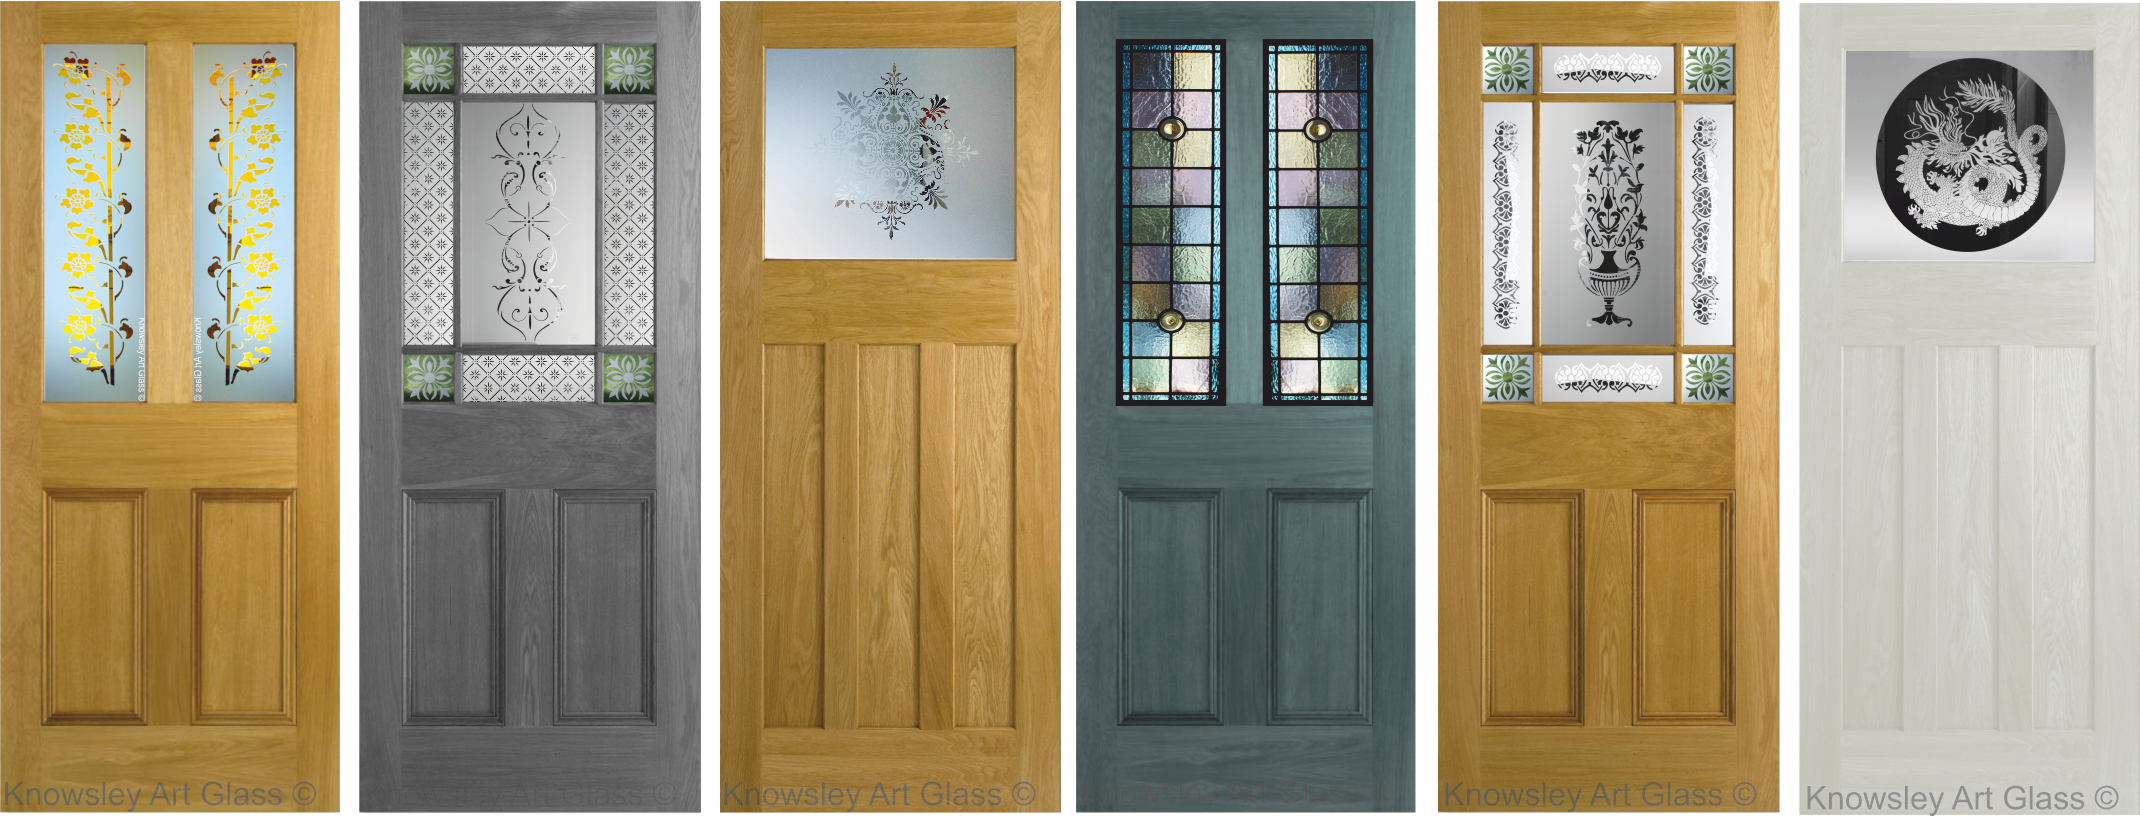 Decorative glass doors